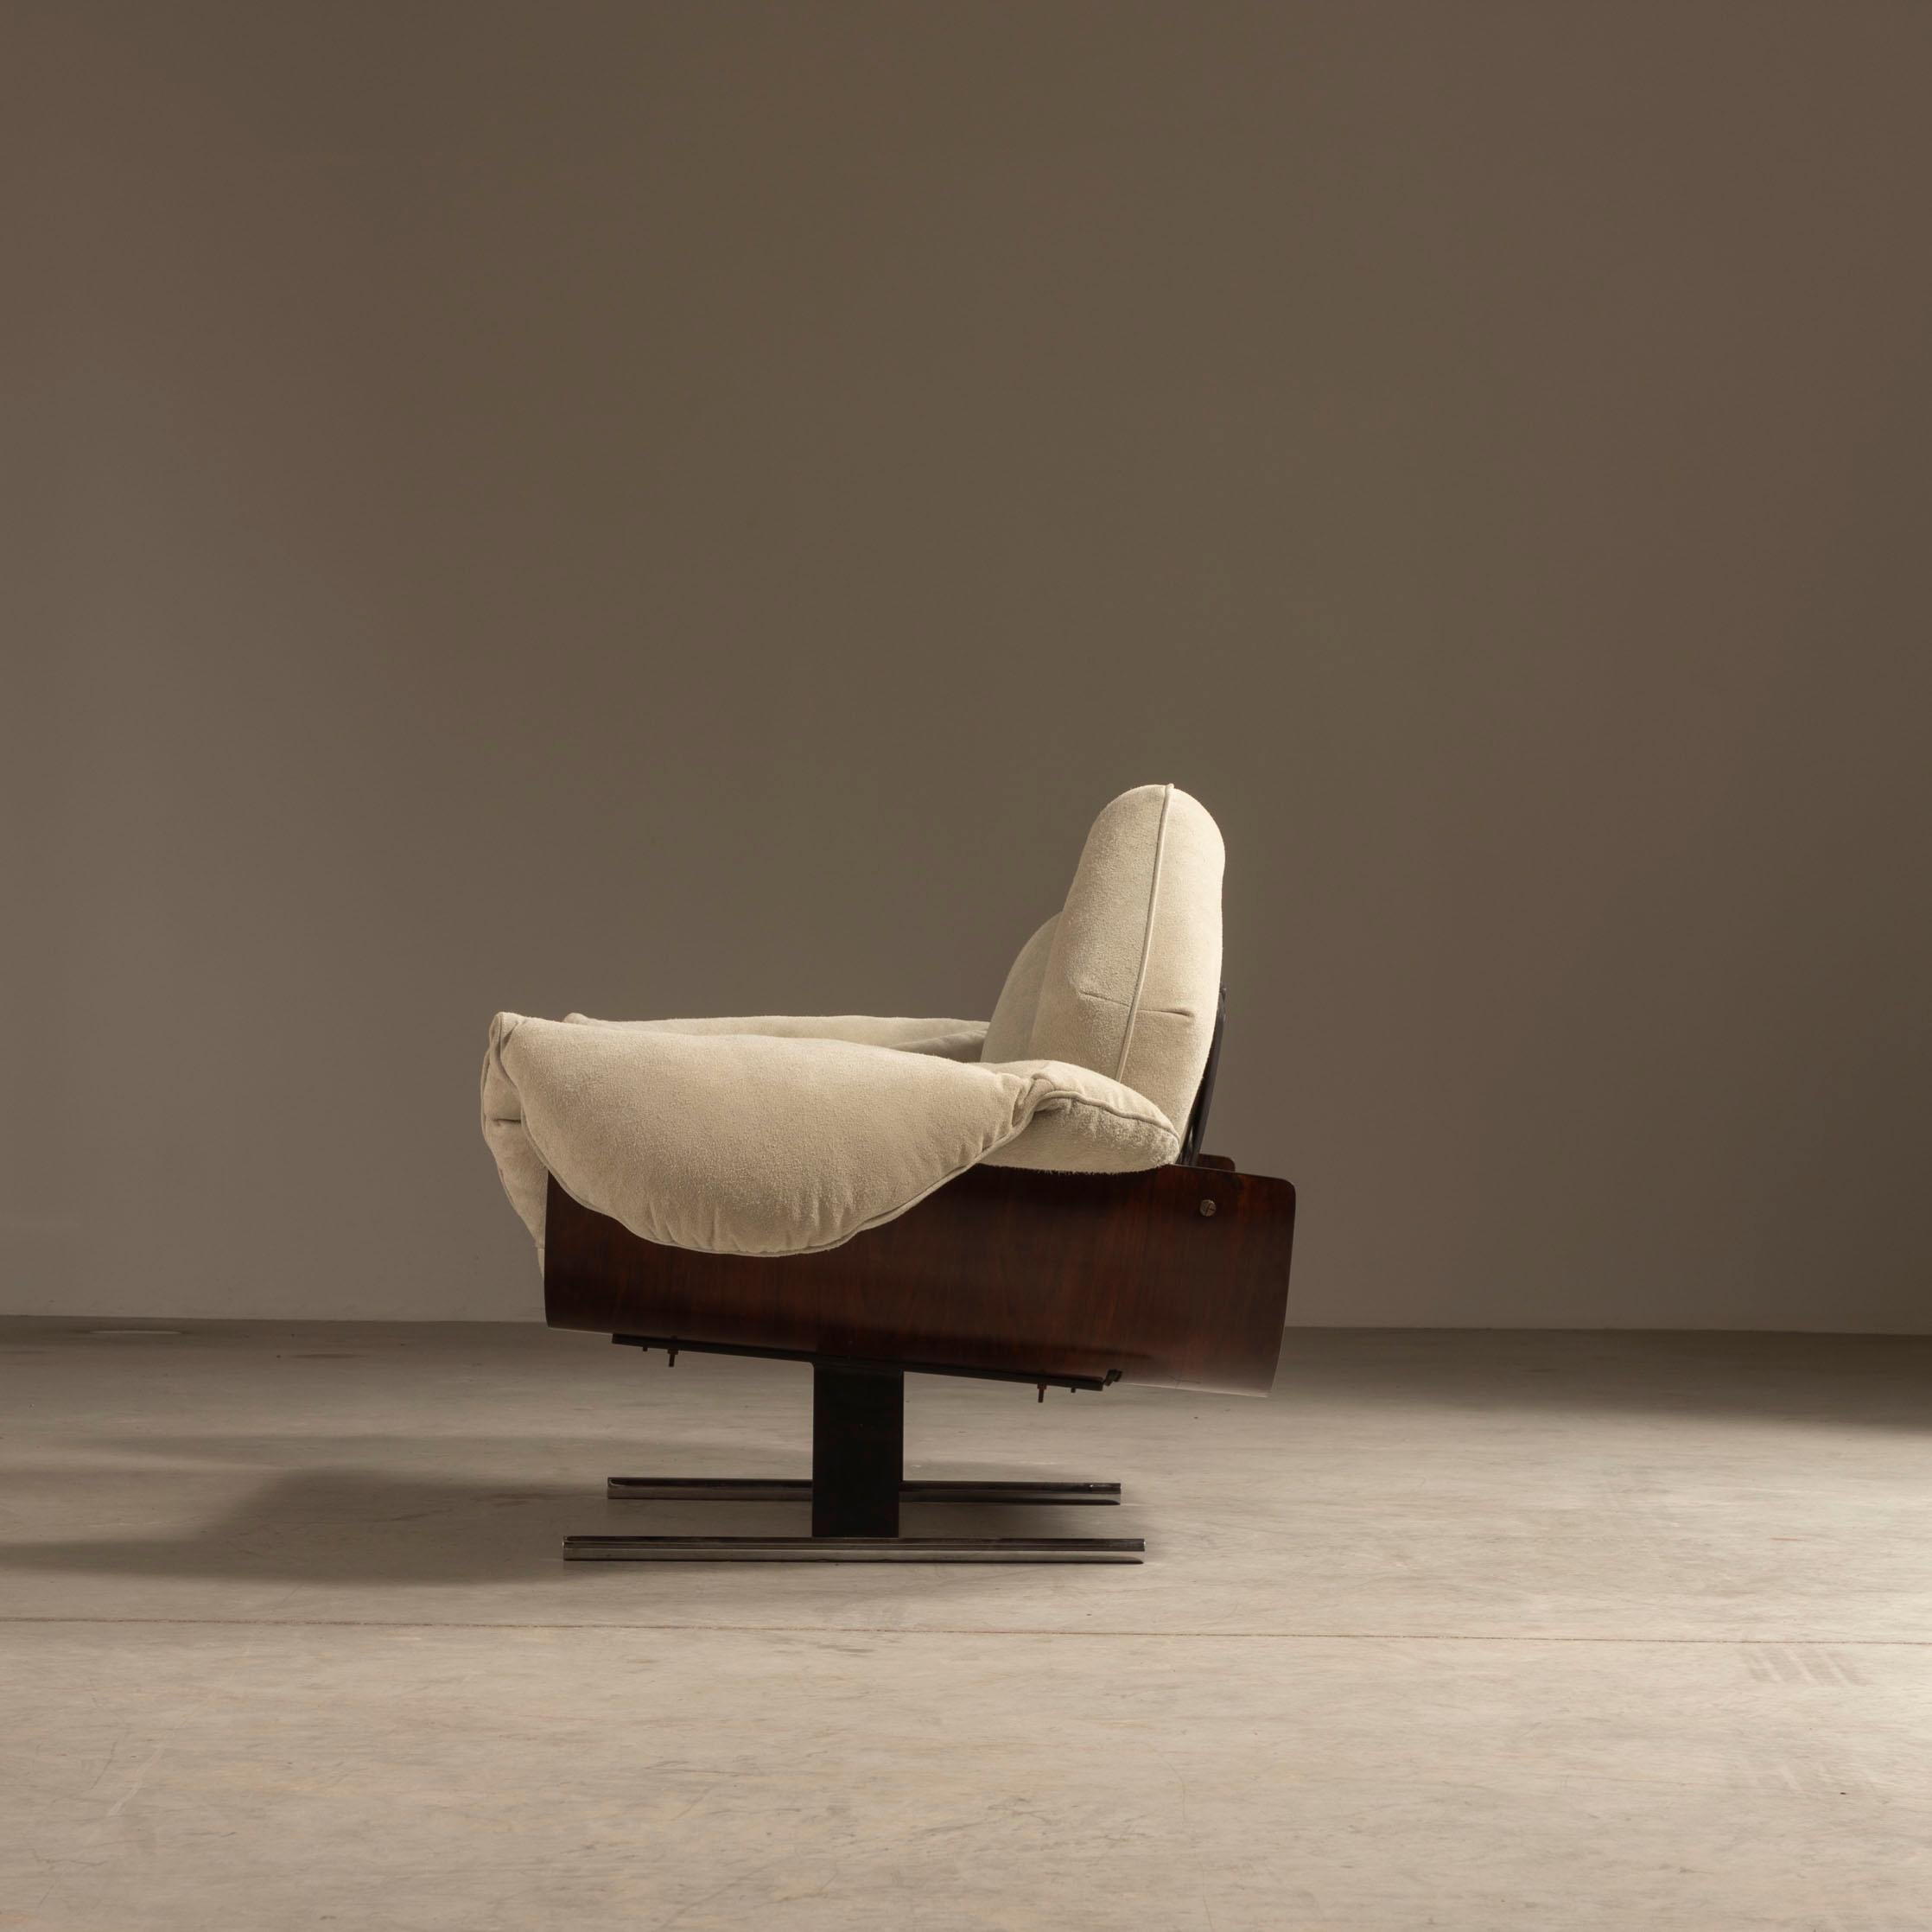 20th Century Jorge Zalszupin's Presidential Lounge Chair, Brazilian Mid-Century Modern Design For Sale